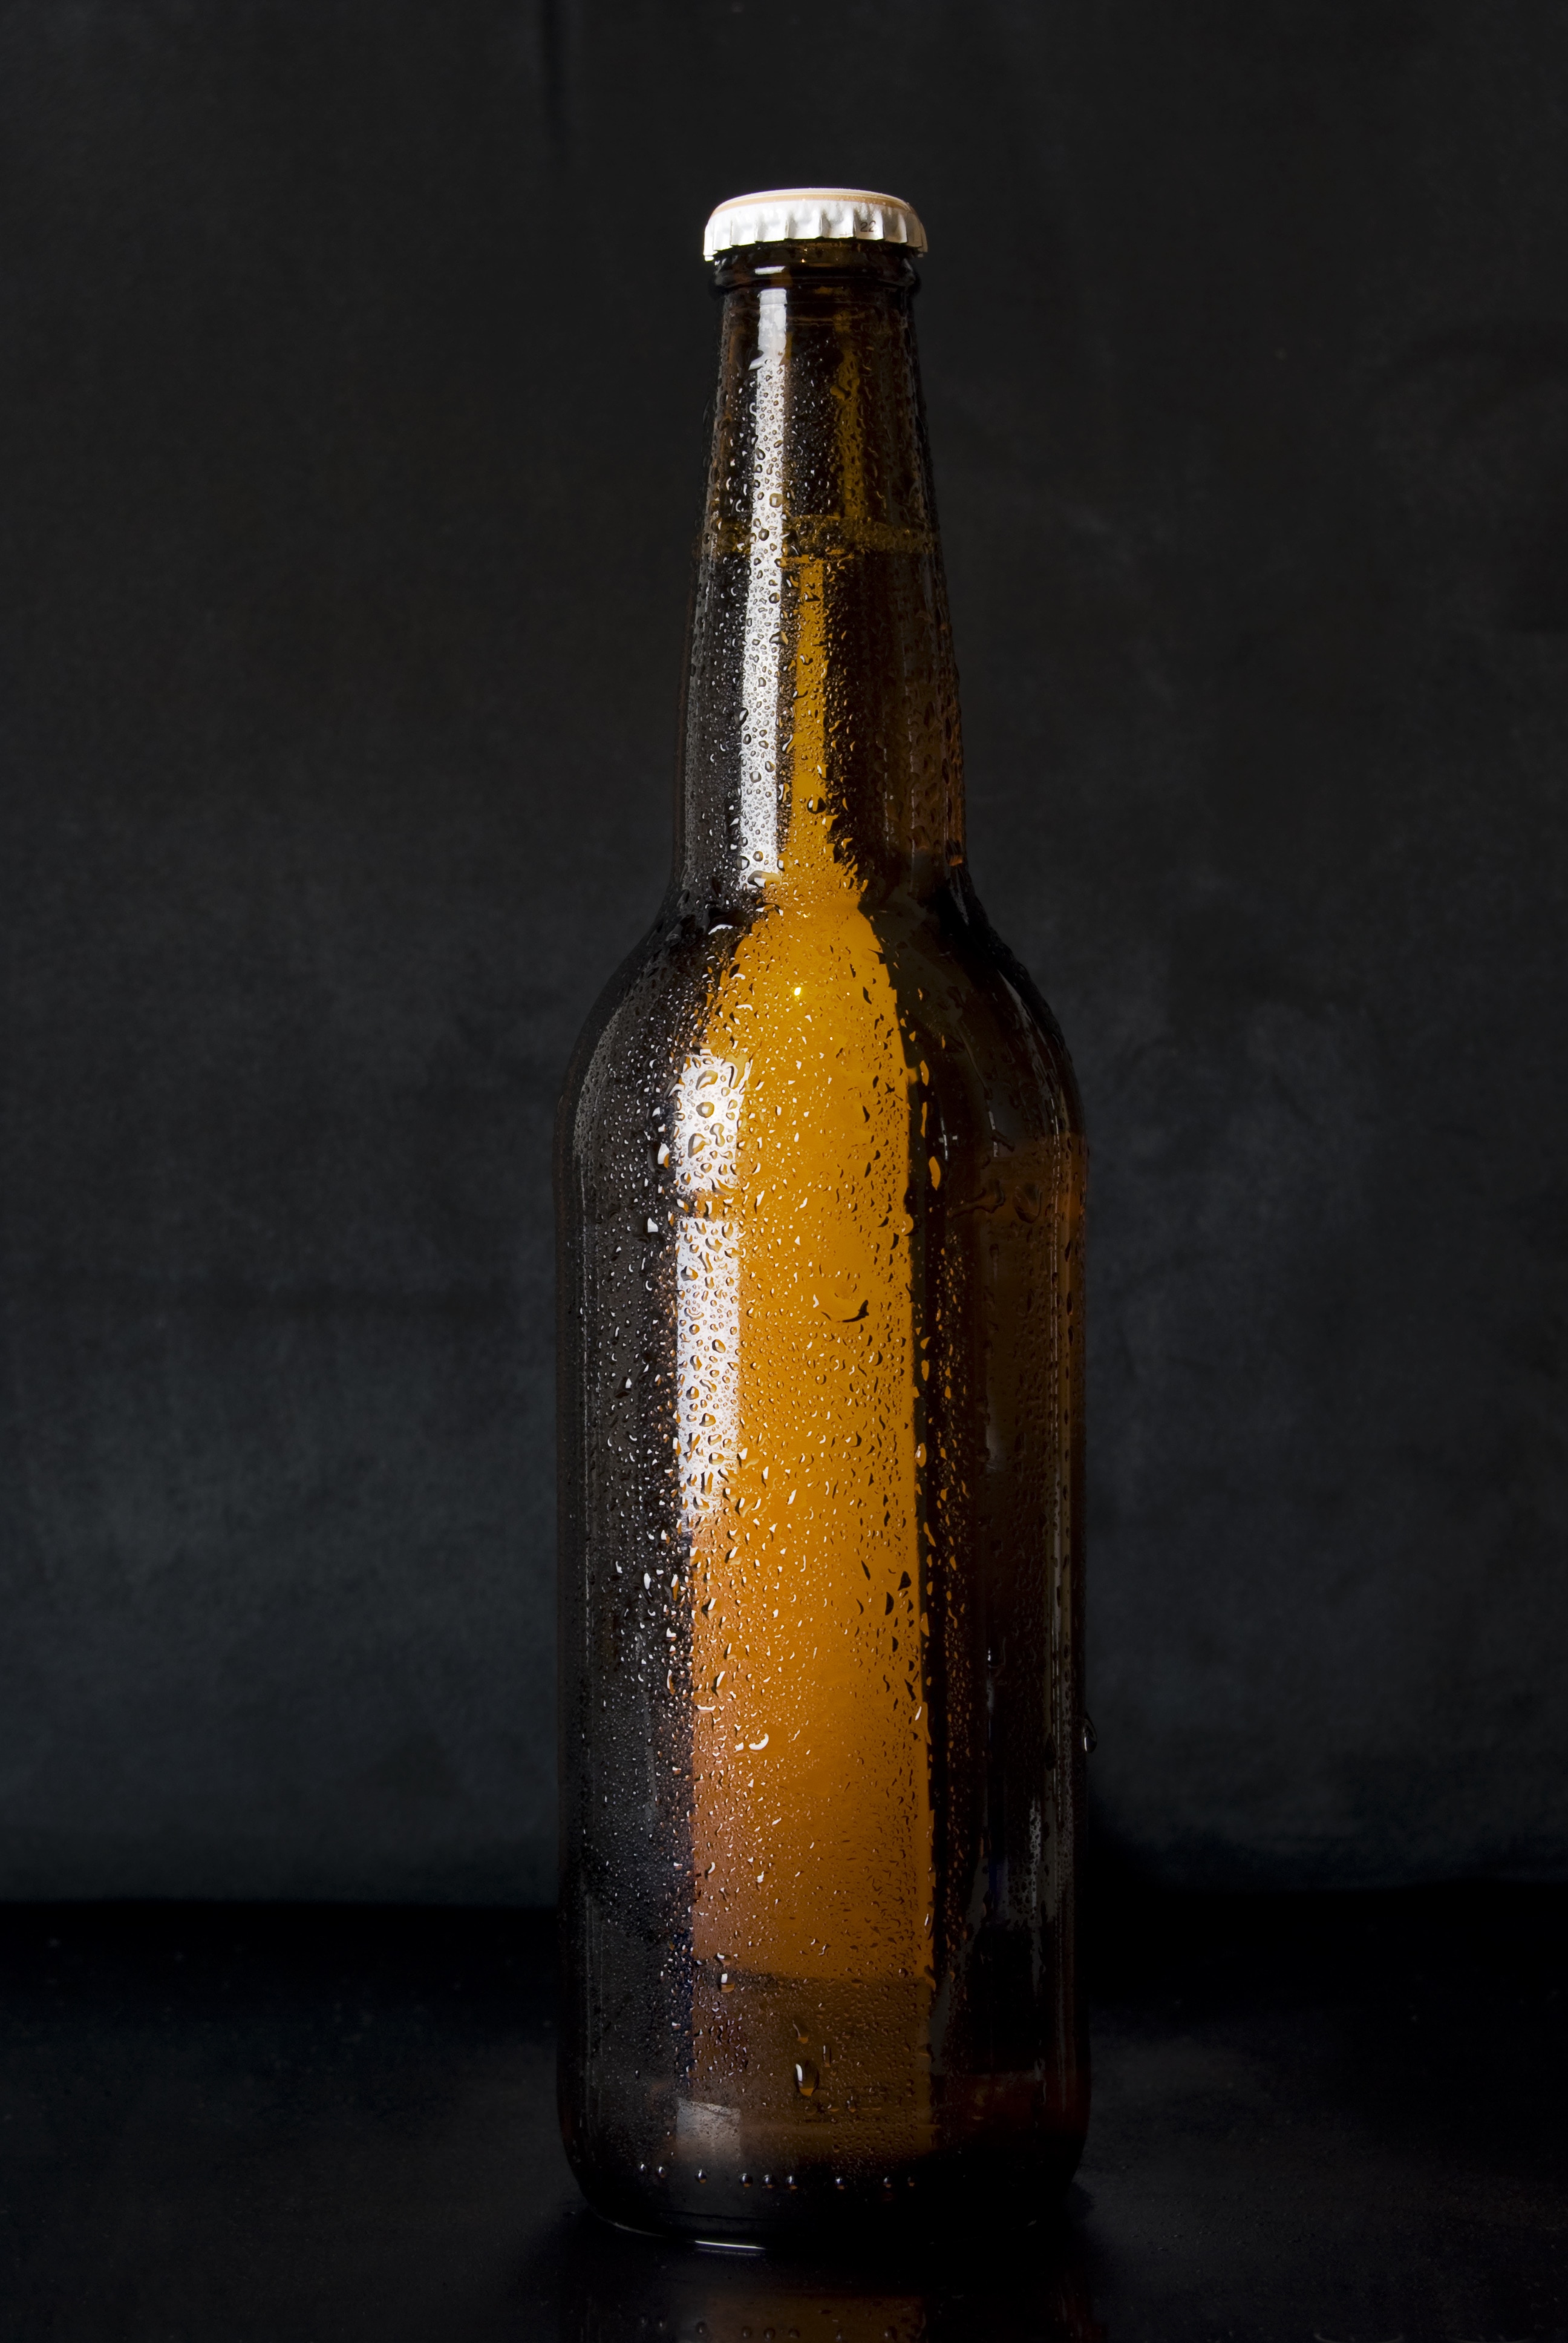 beer bottle wallpaper,bottle,glass bottle,beer bottle,drink,product